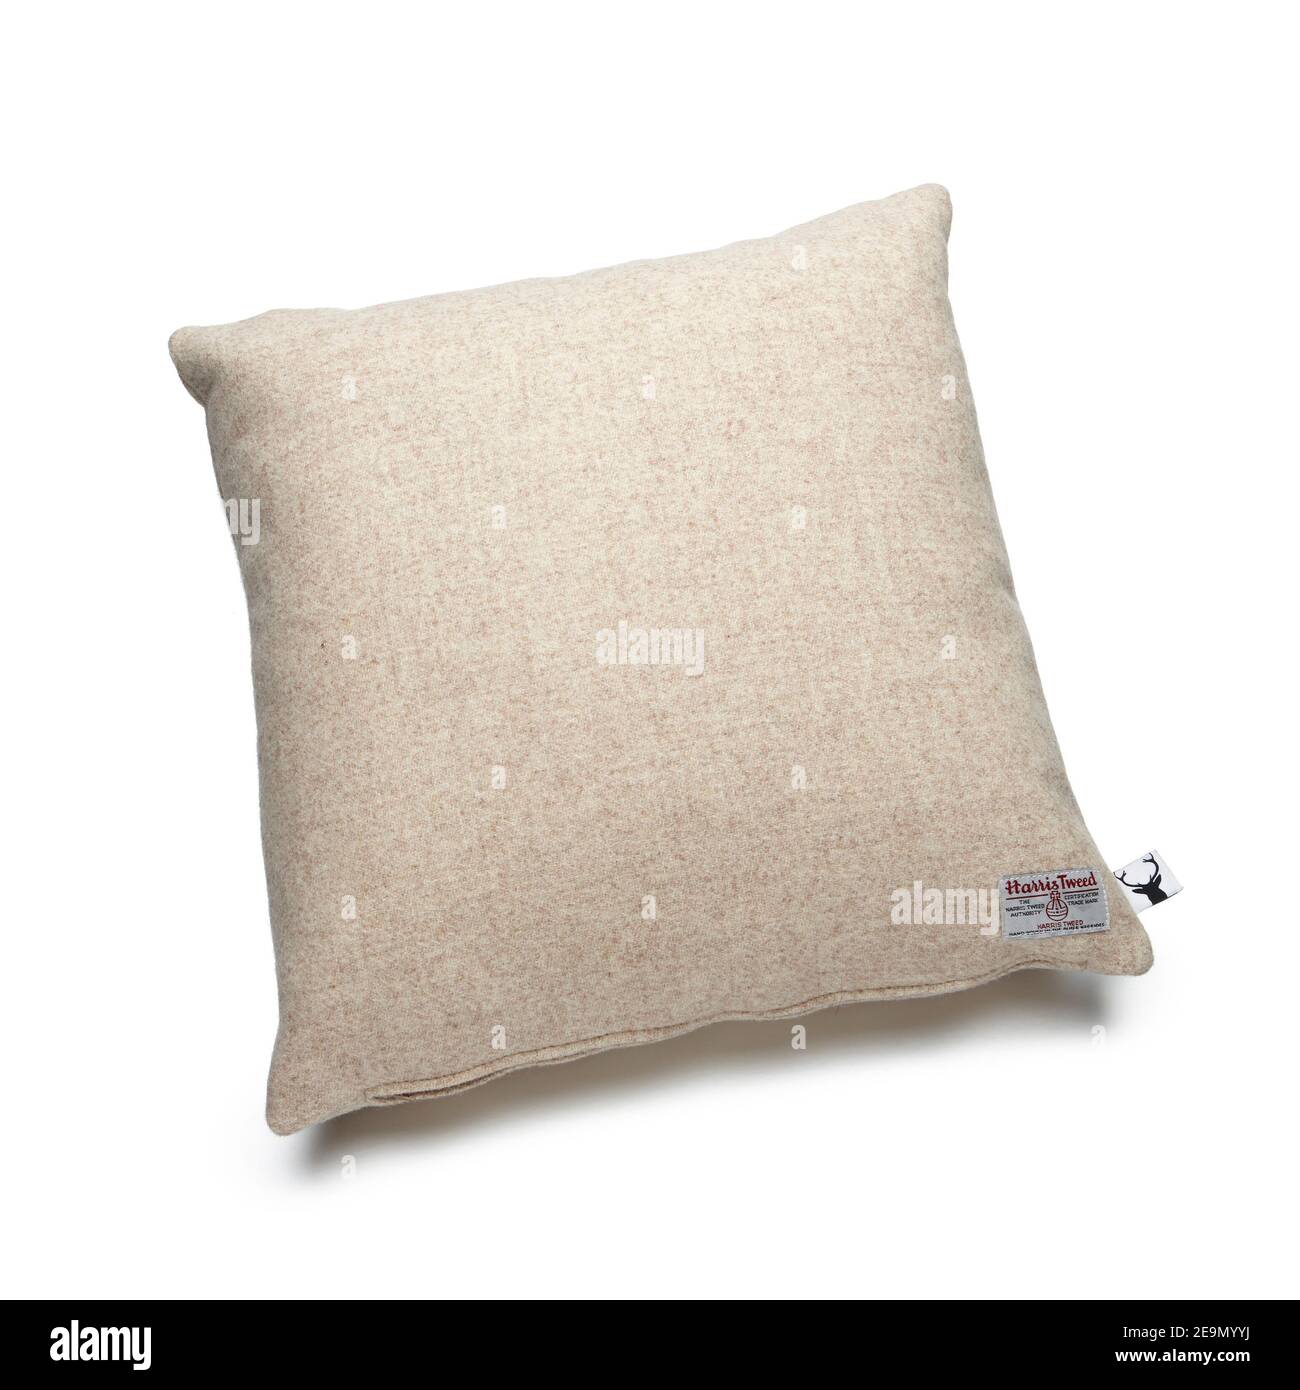 cushion cut out design designer elegant perfect modern white background Stock Photo